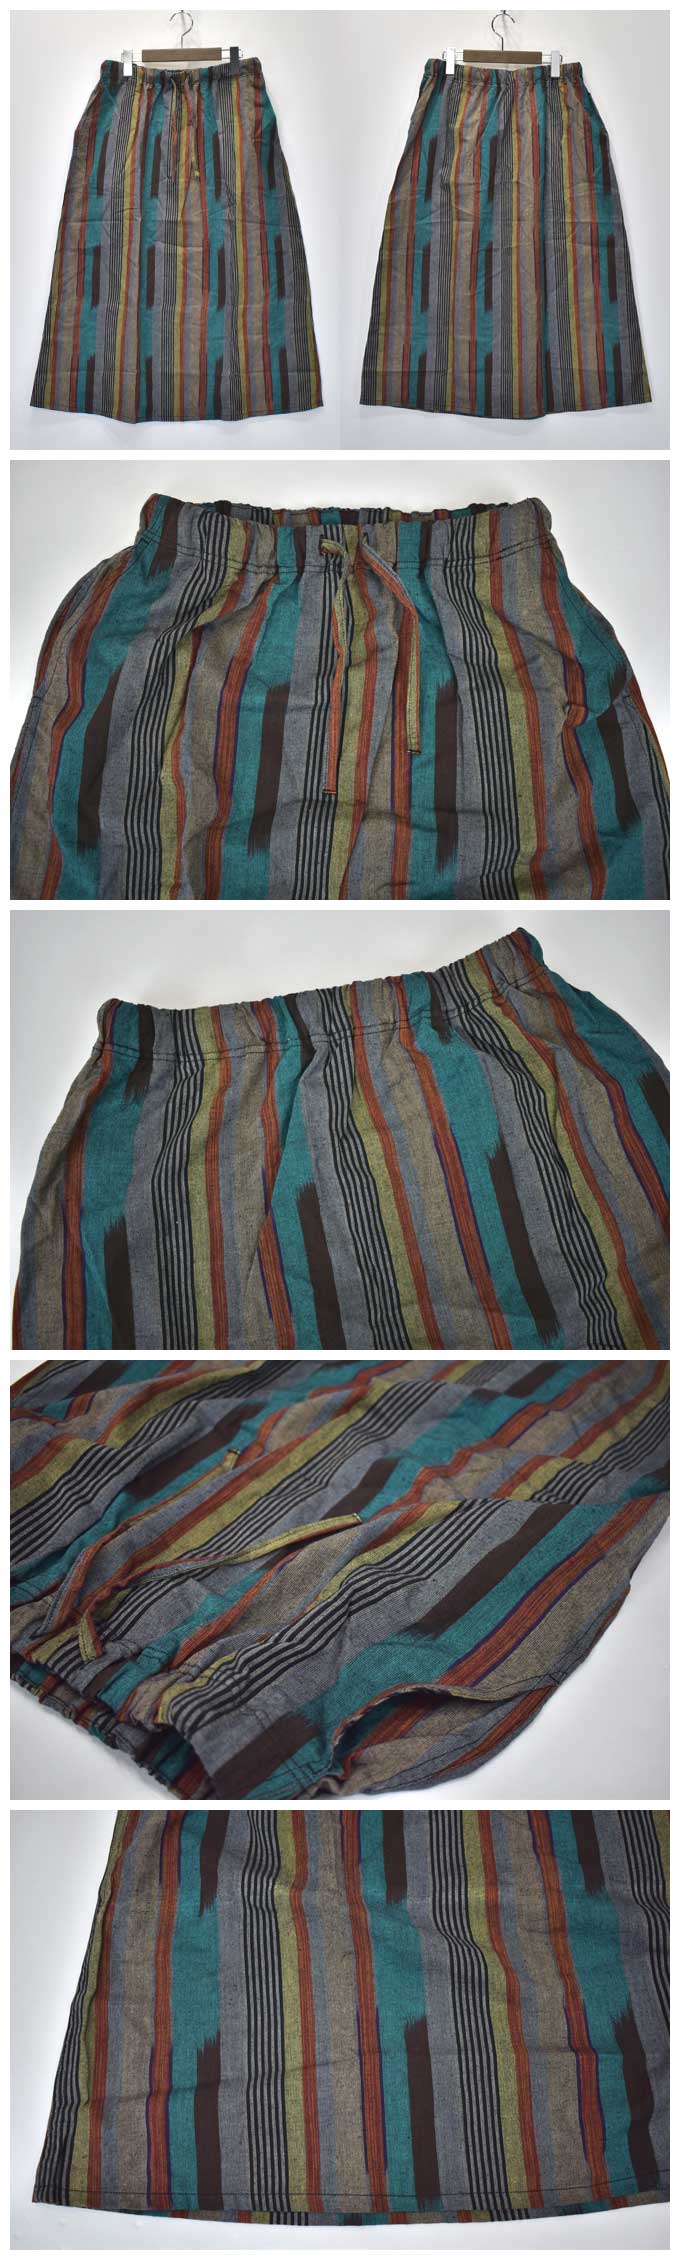 South2 West8 String Skirt (Cottoon Cloth/Splashed Pattern) 